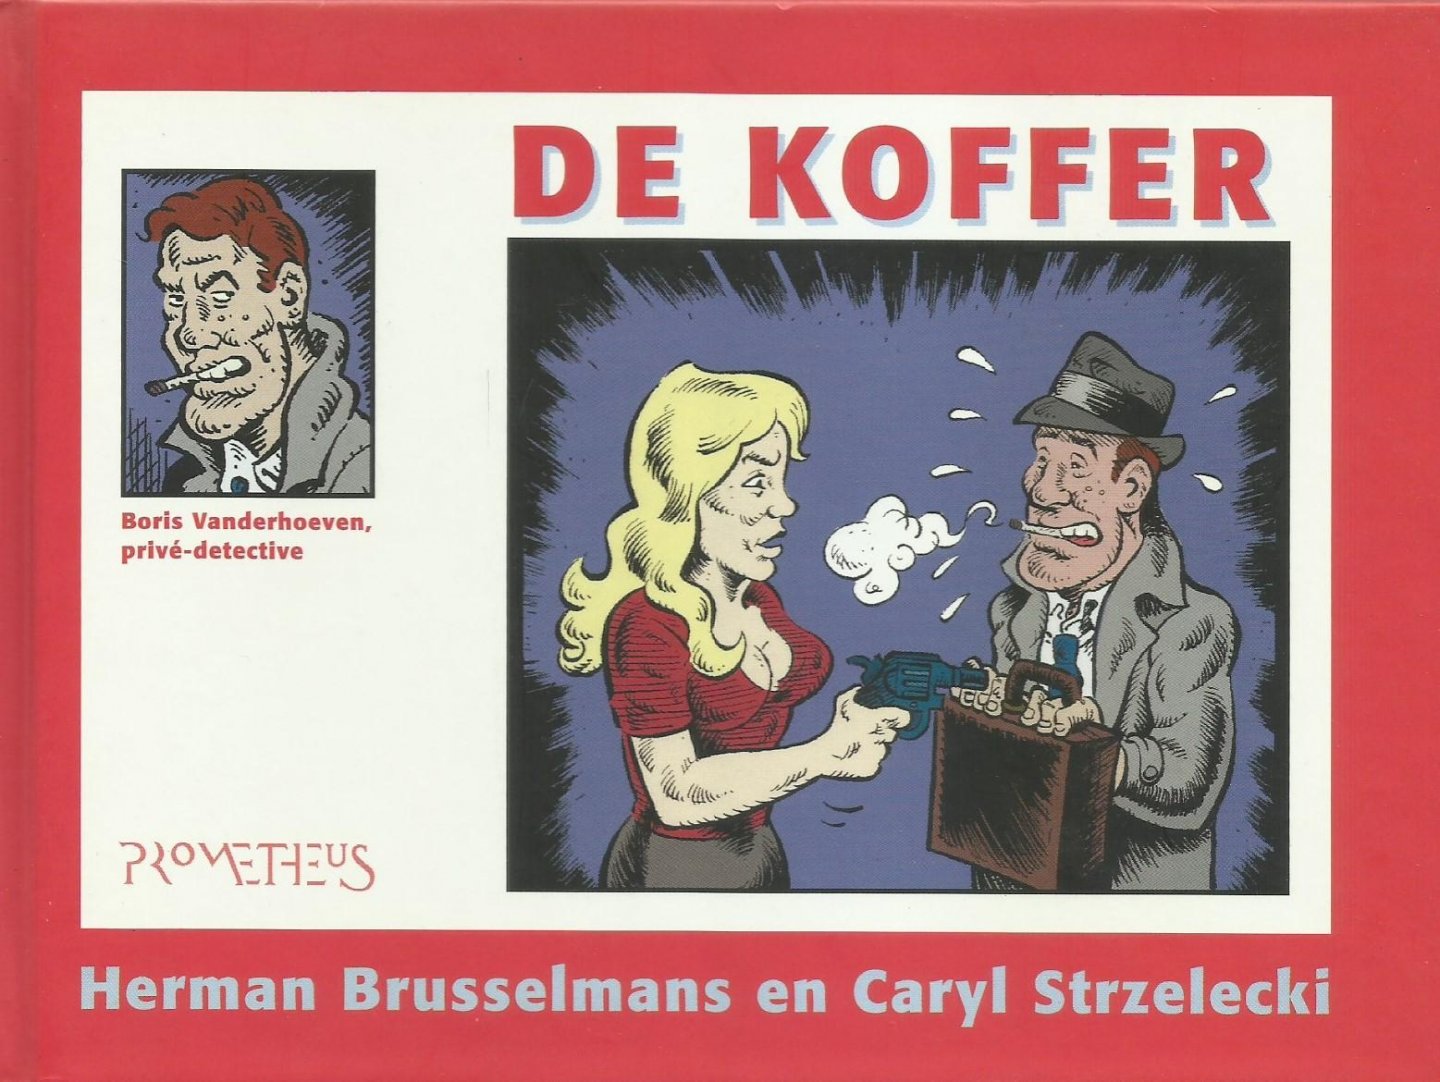 Brusselmans, Herman & Caryl Strzelecki - De koffer